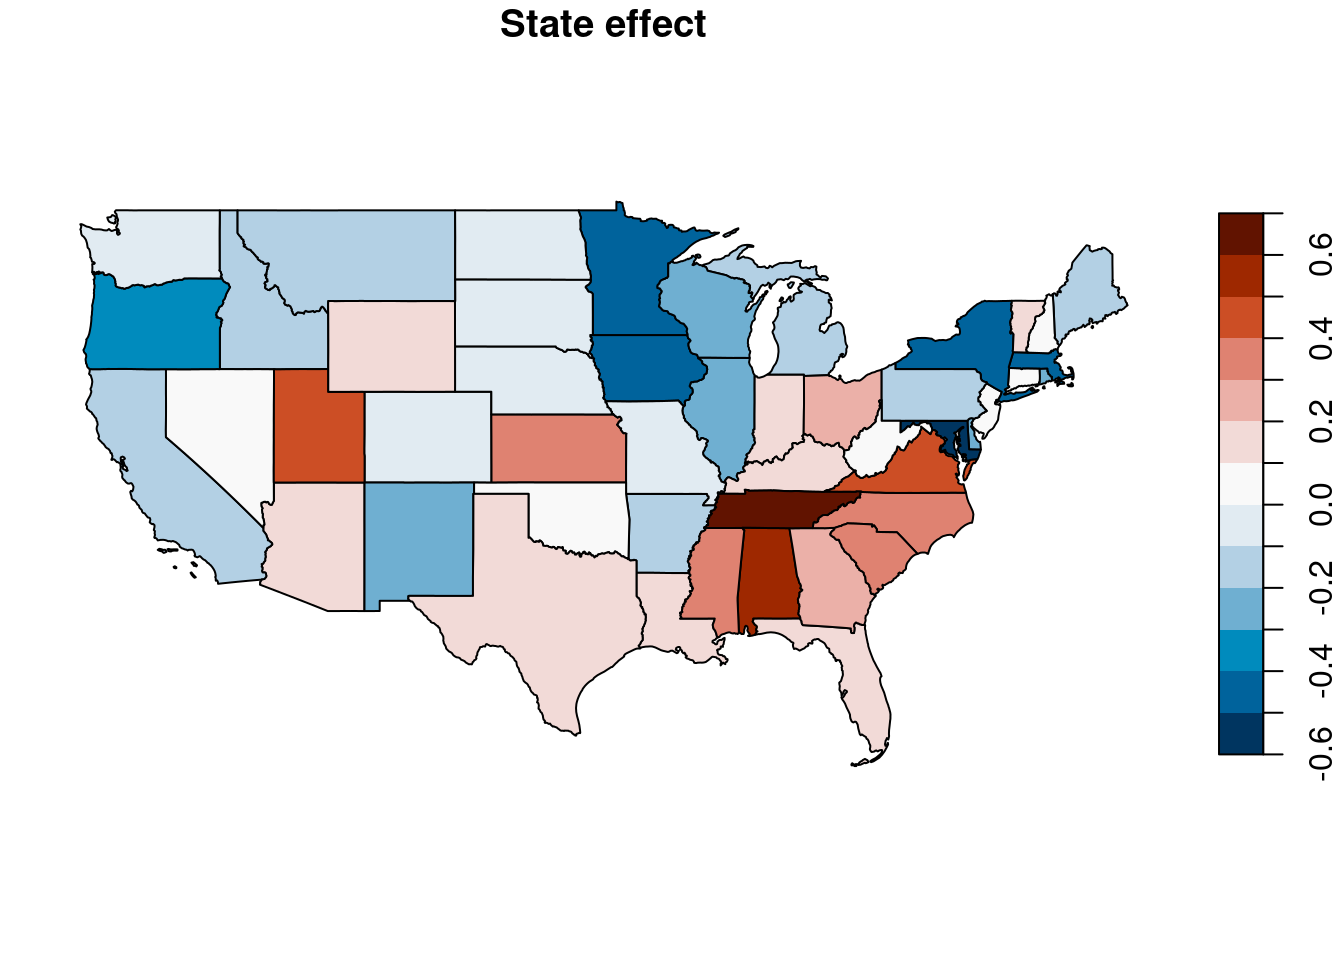 Point estimates of state-level random effect.